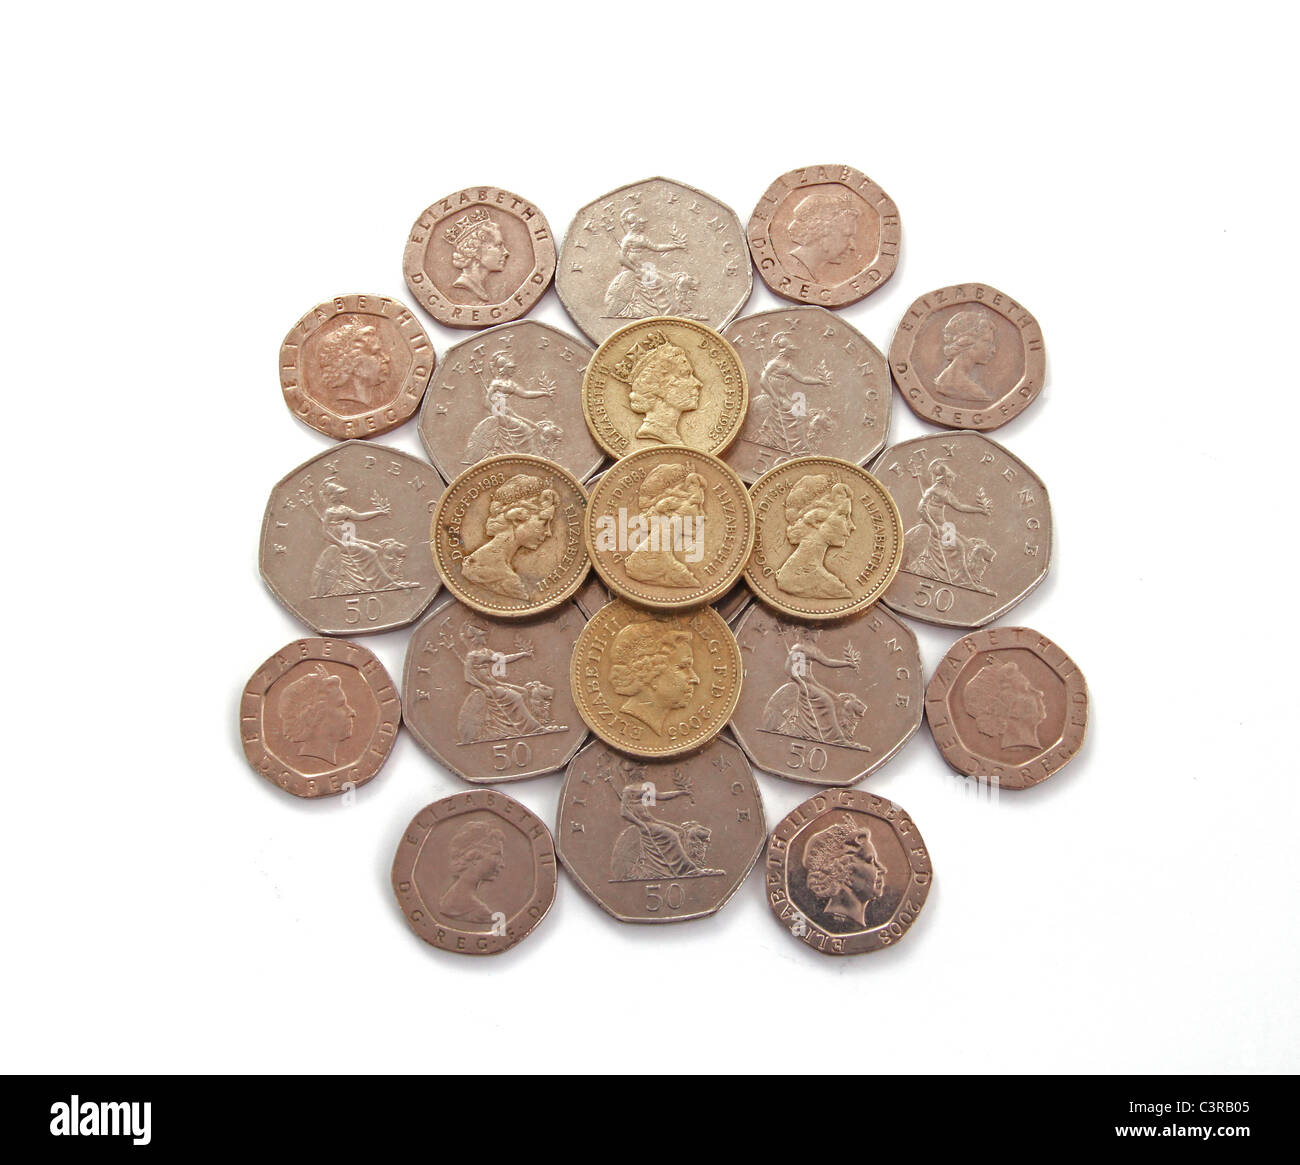 British, UK, coins on a plain white background. Stock Photo